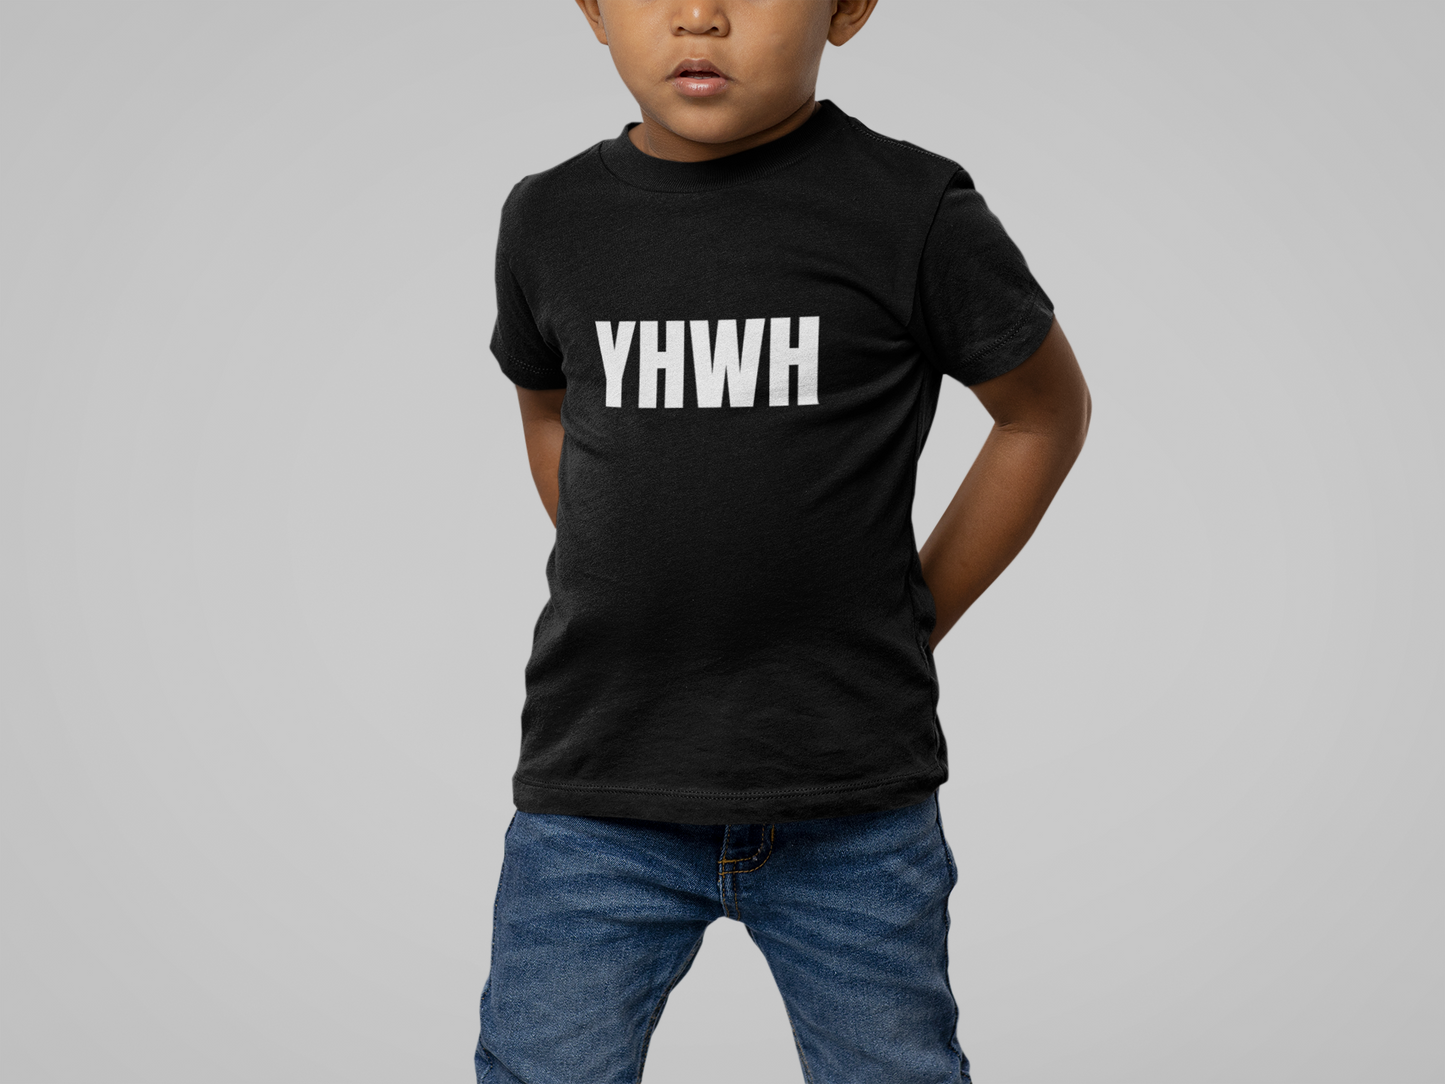 Next Gen YHWH T-Shirt